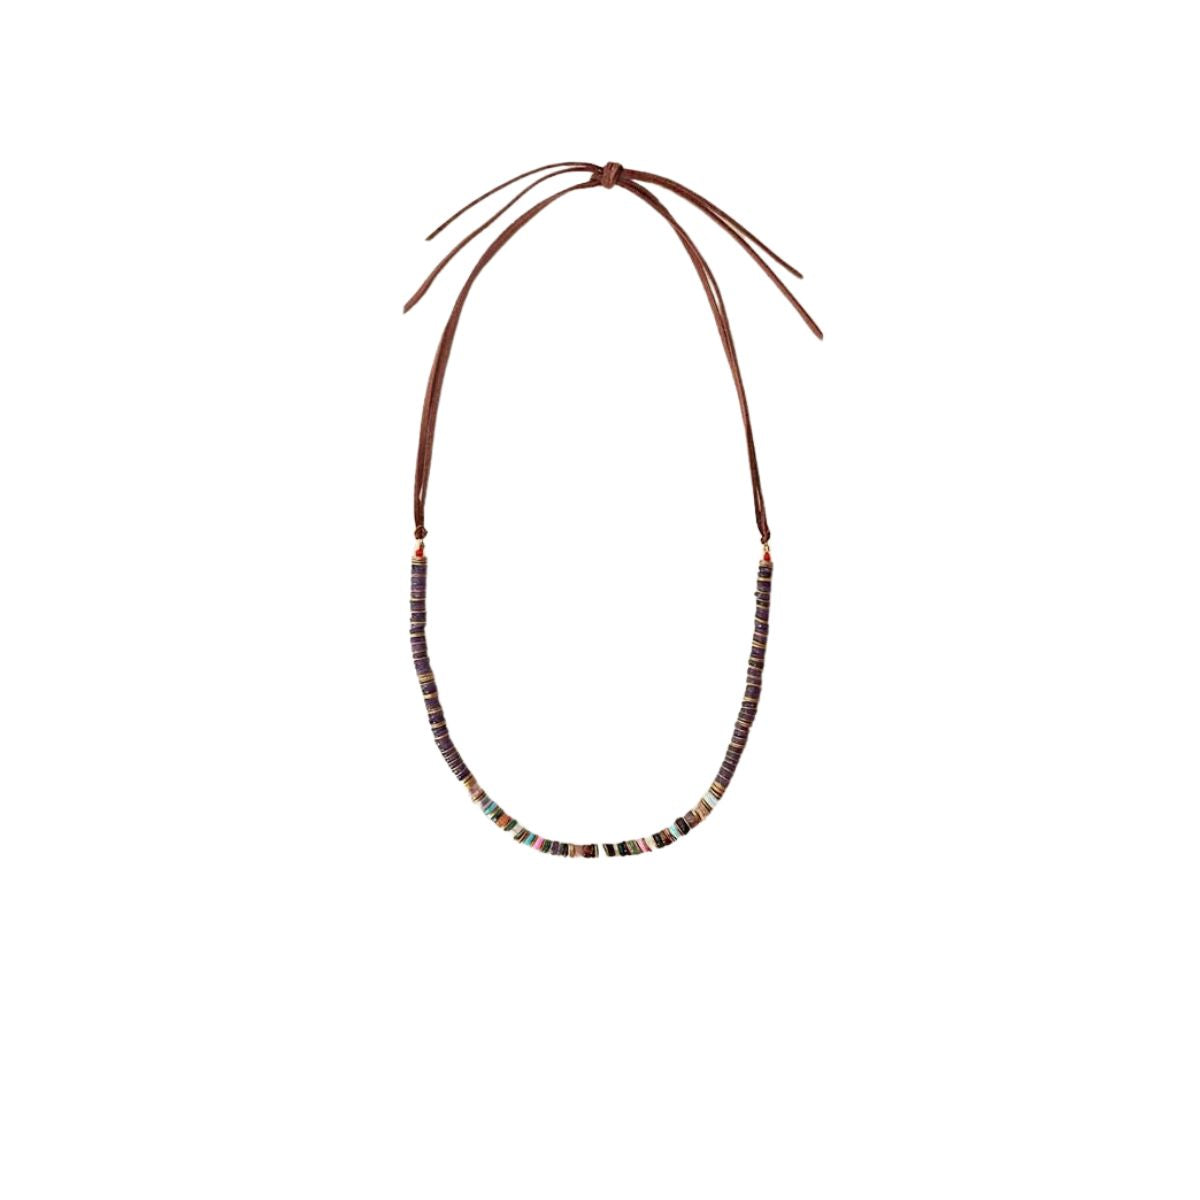 Xirena Solange Stone Necklace in Indigo Brown